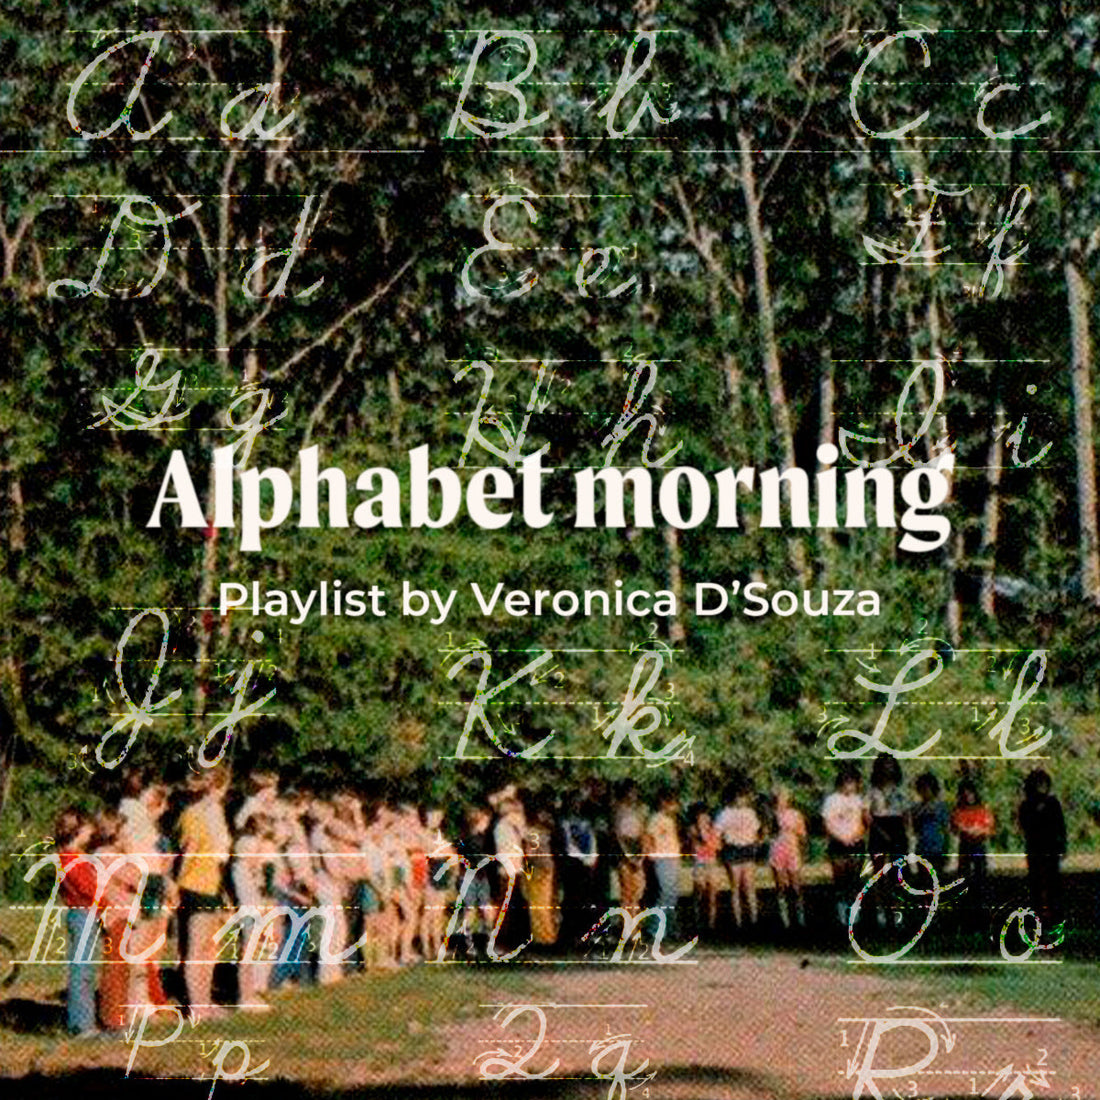 Alphabet morning